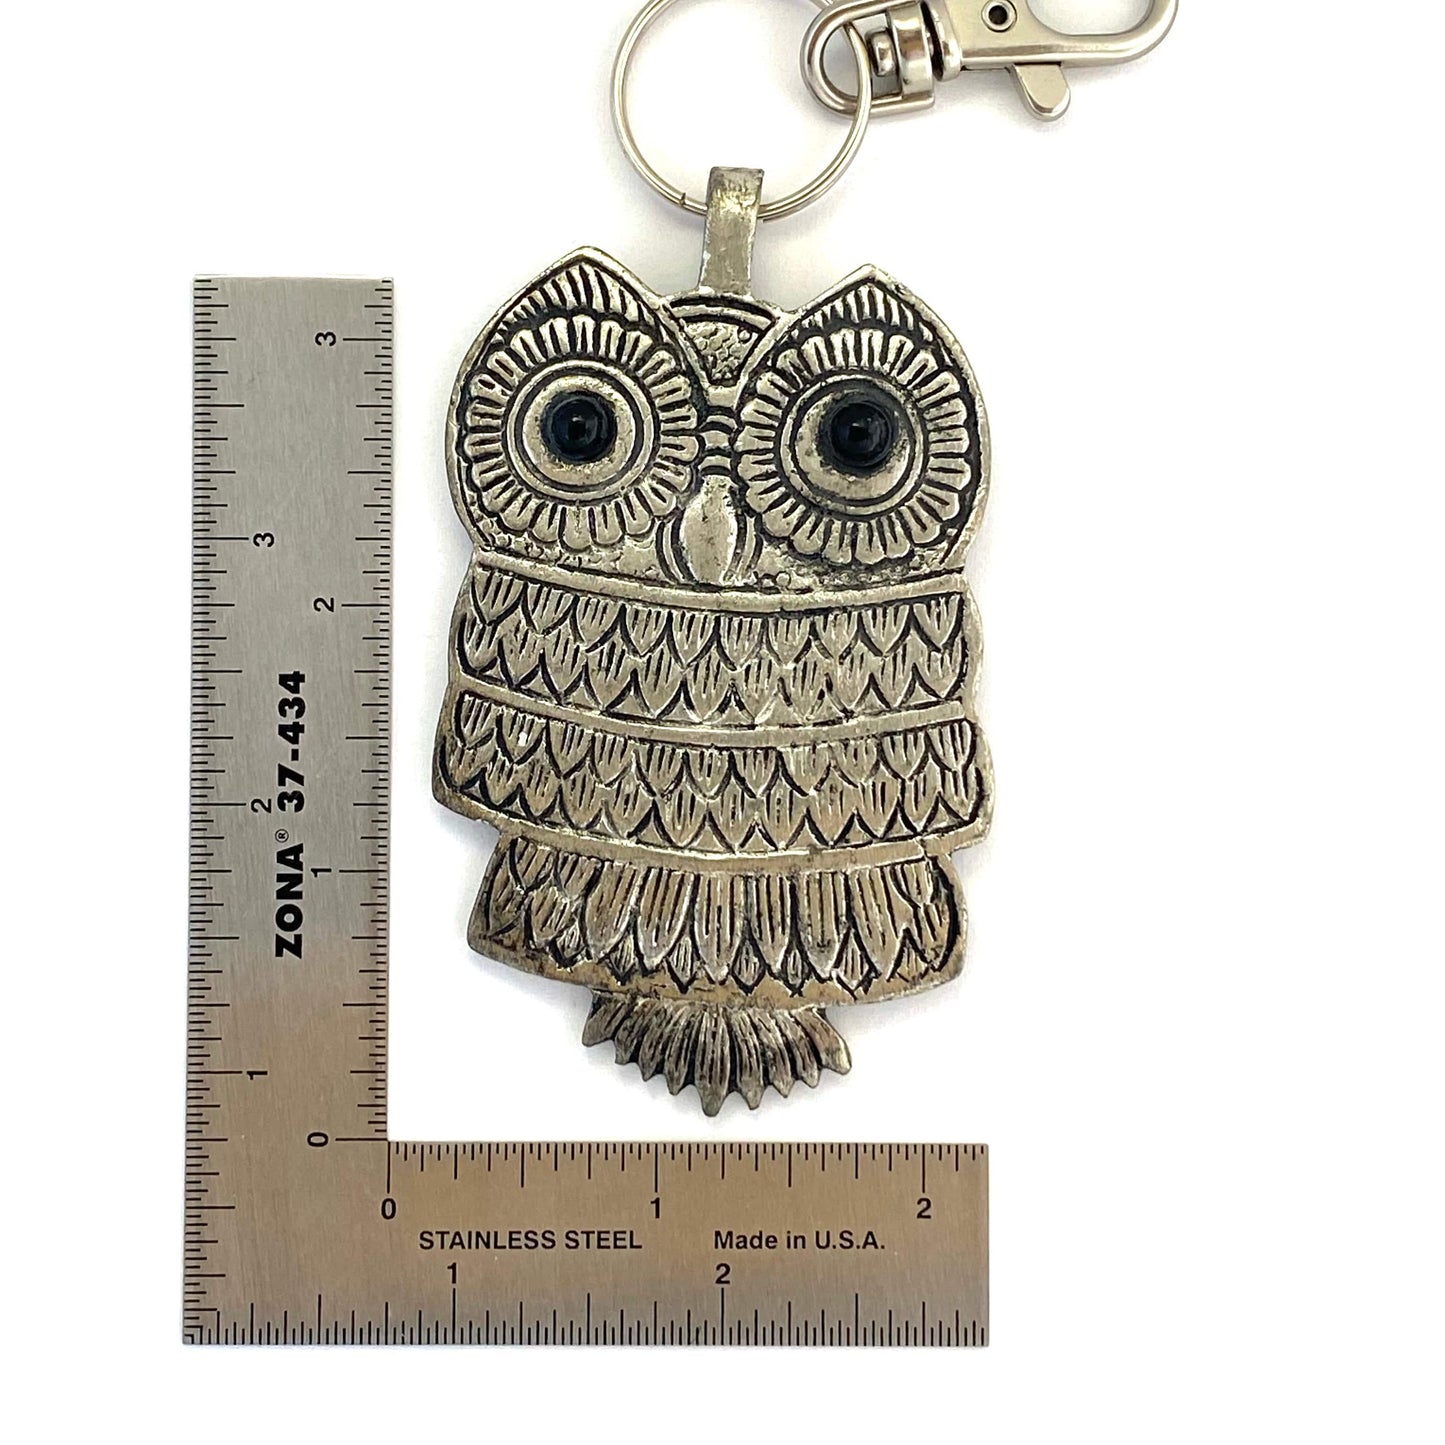 Metal Owl Keychain Large Pendant Charm Key Ring Silvertone